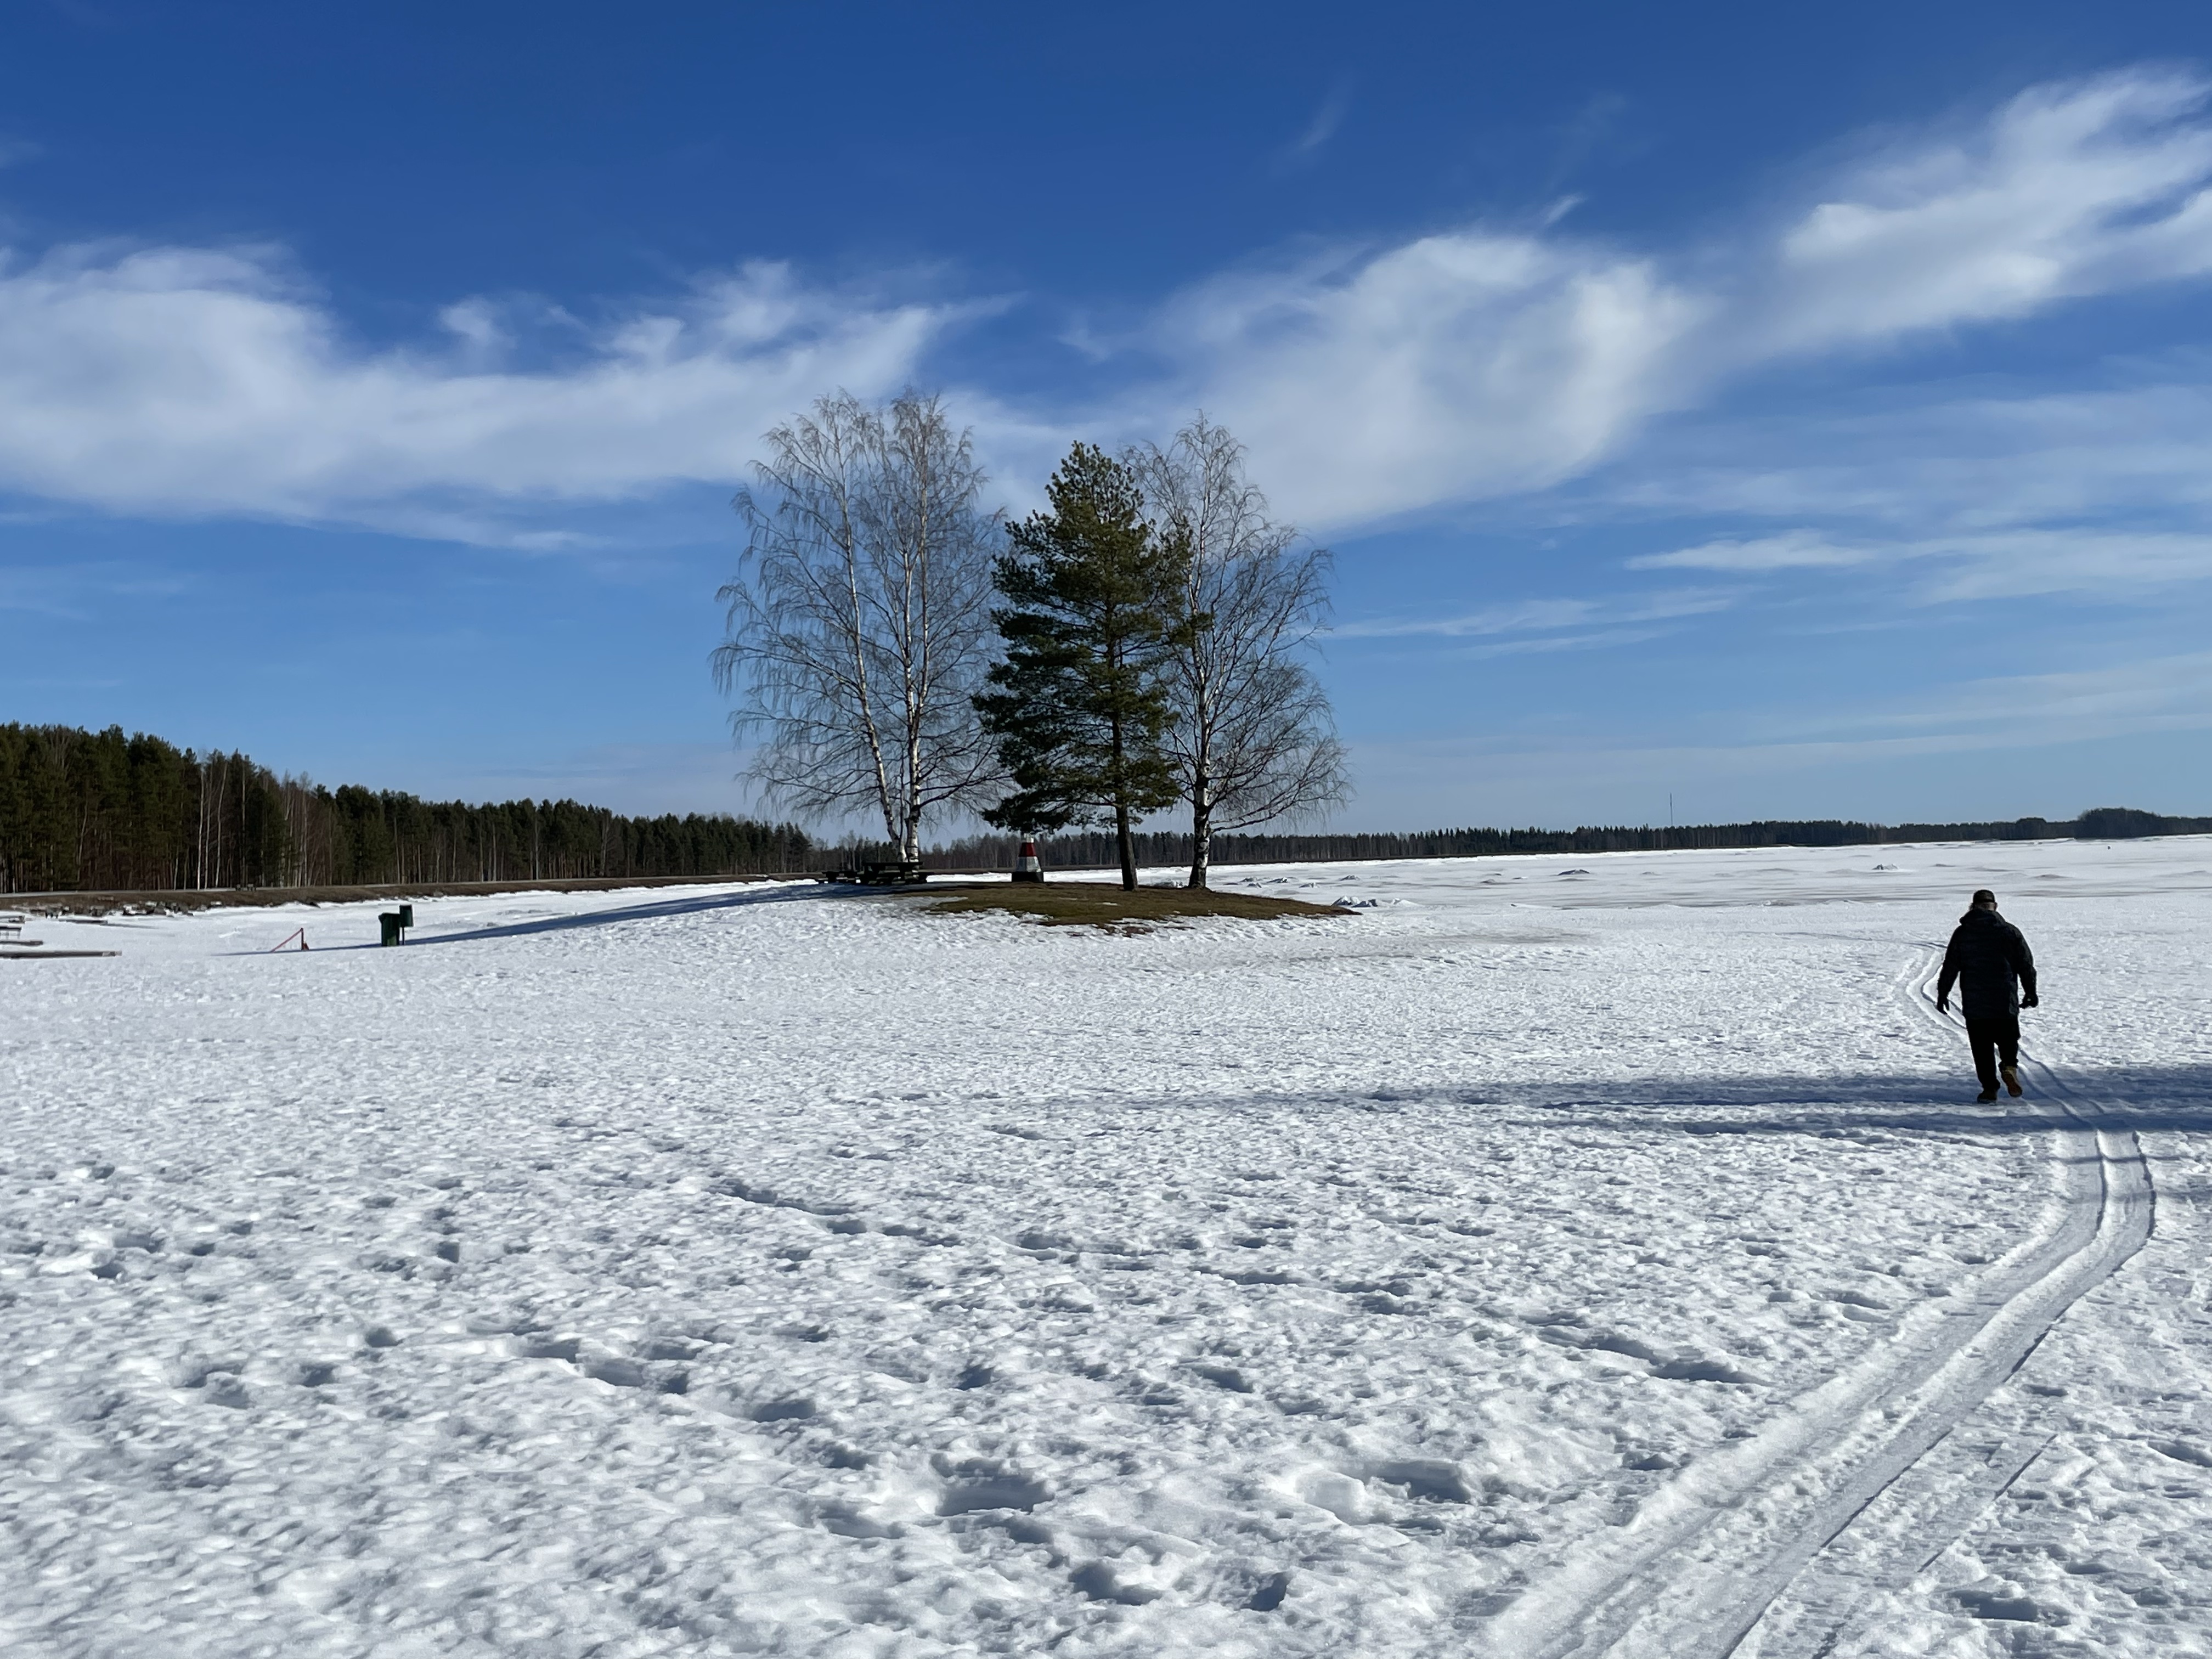 A frozen lake Kalajärvi with a man walking on it towards a small island